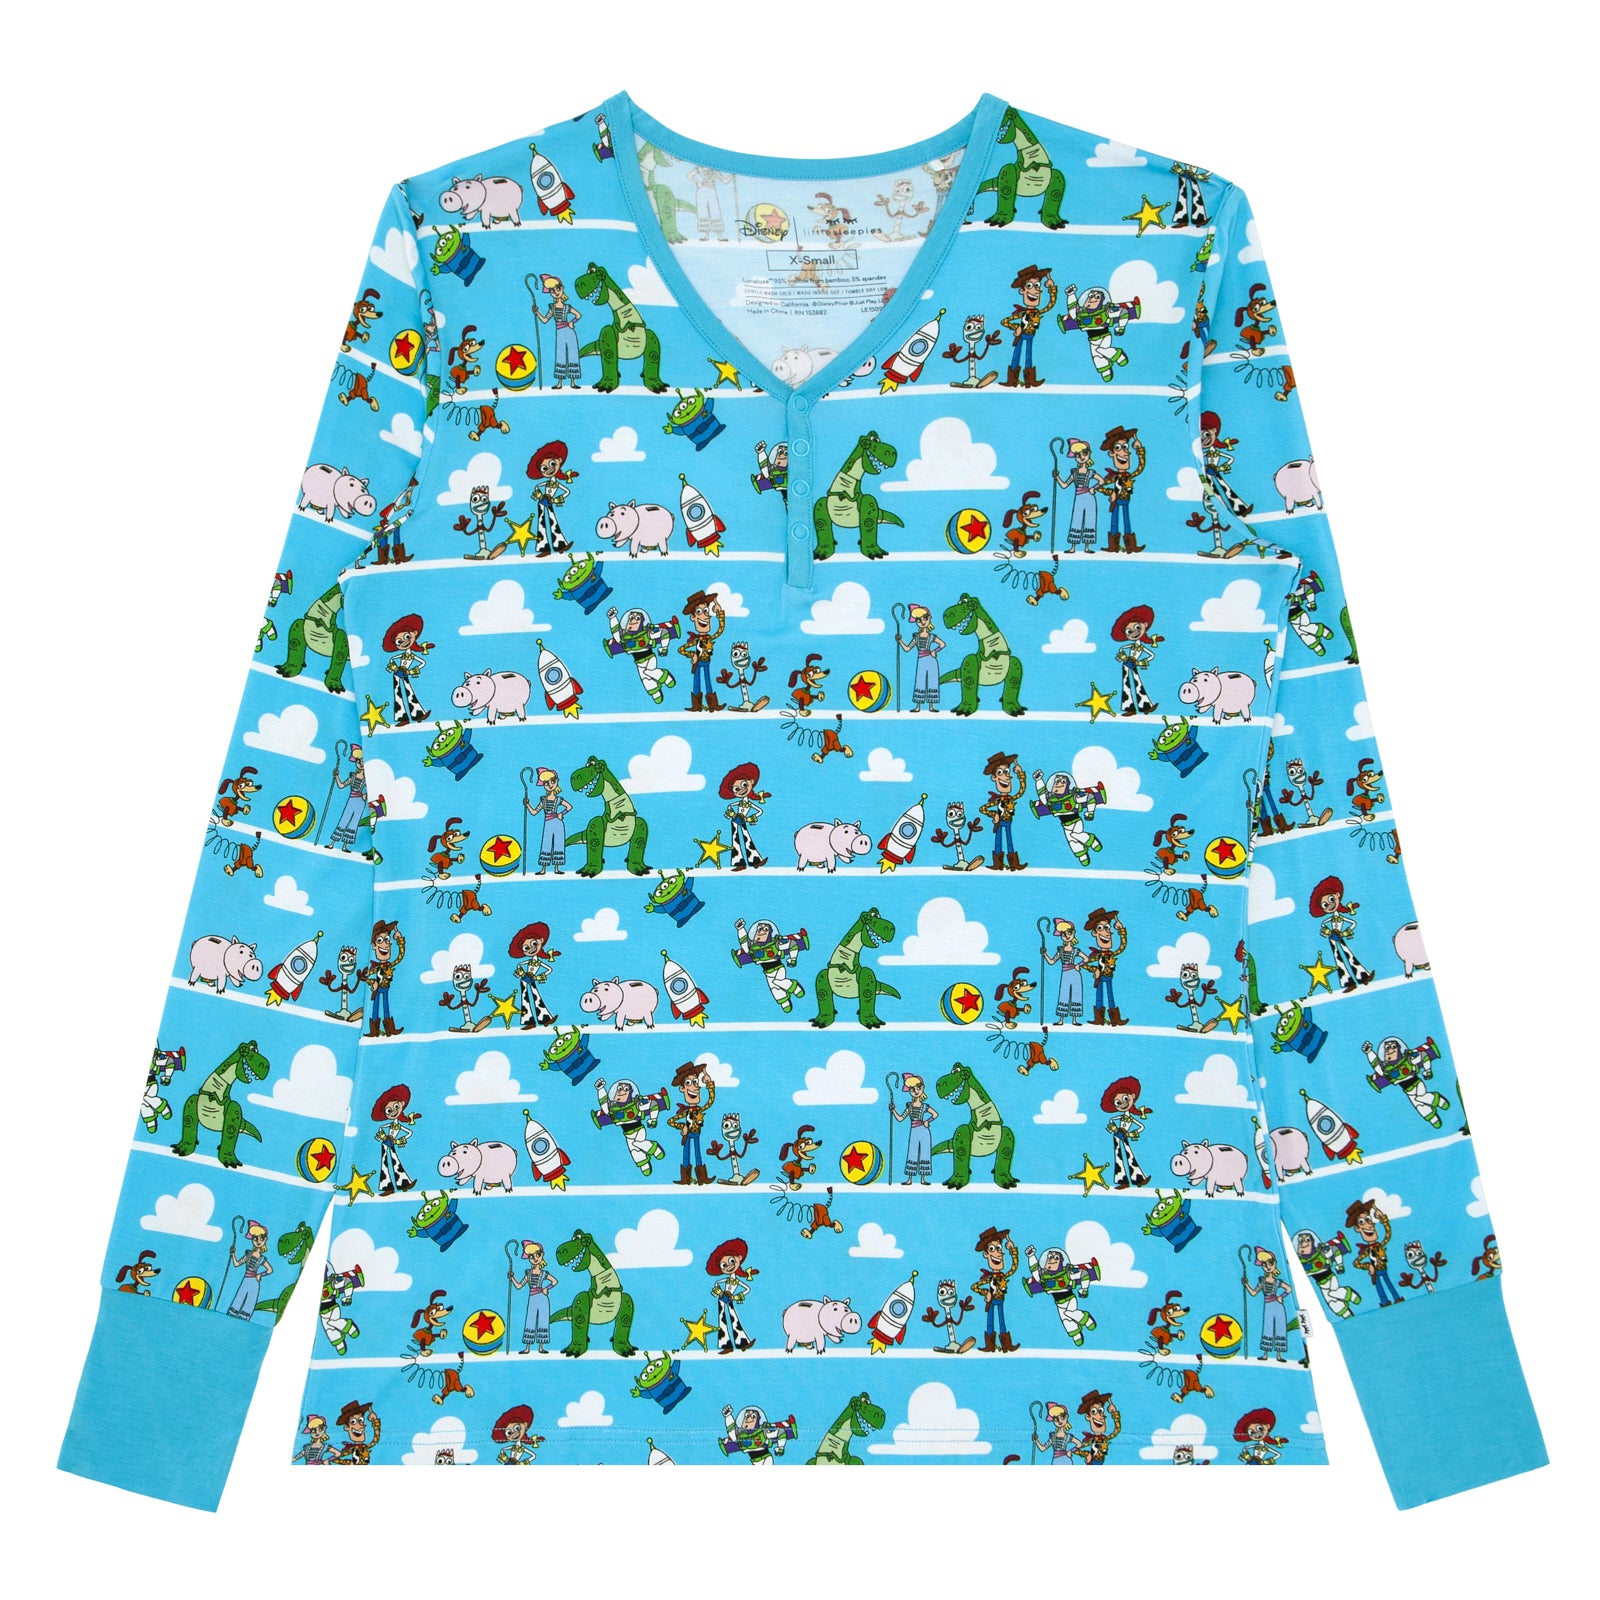 Flat lay image of a Disney Pixar Toy Story Pals women's pajama top